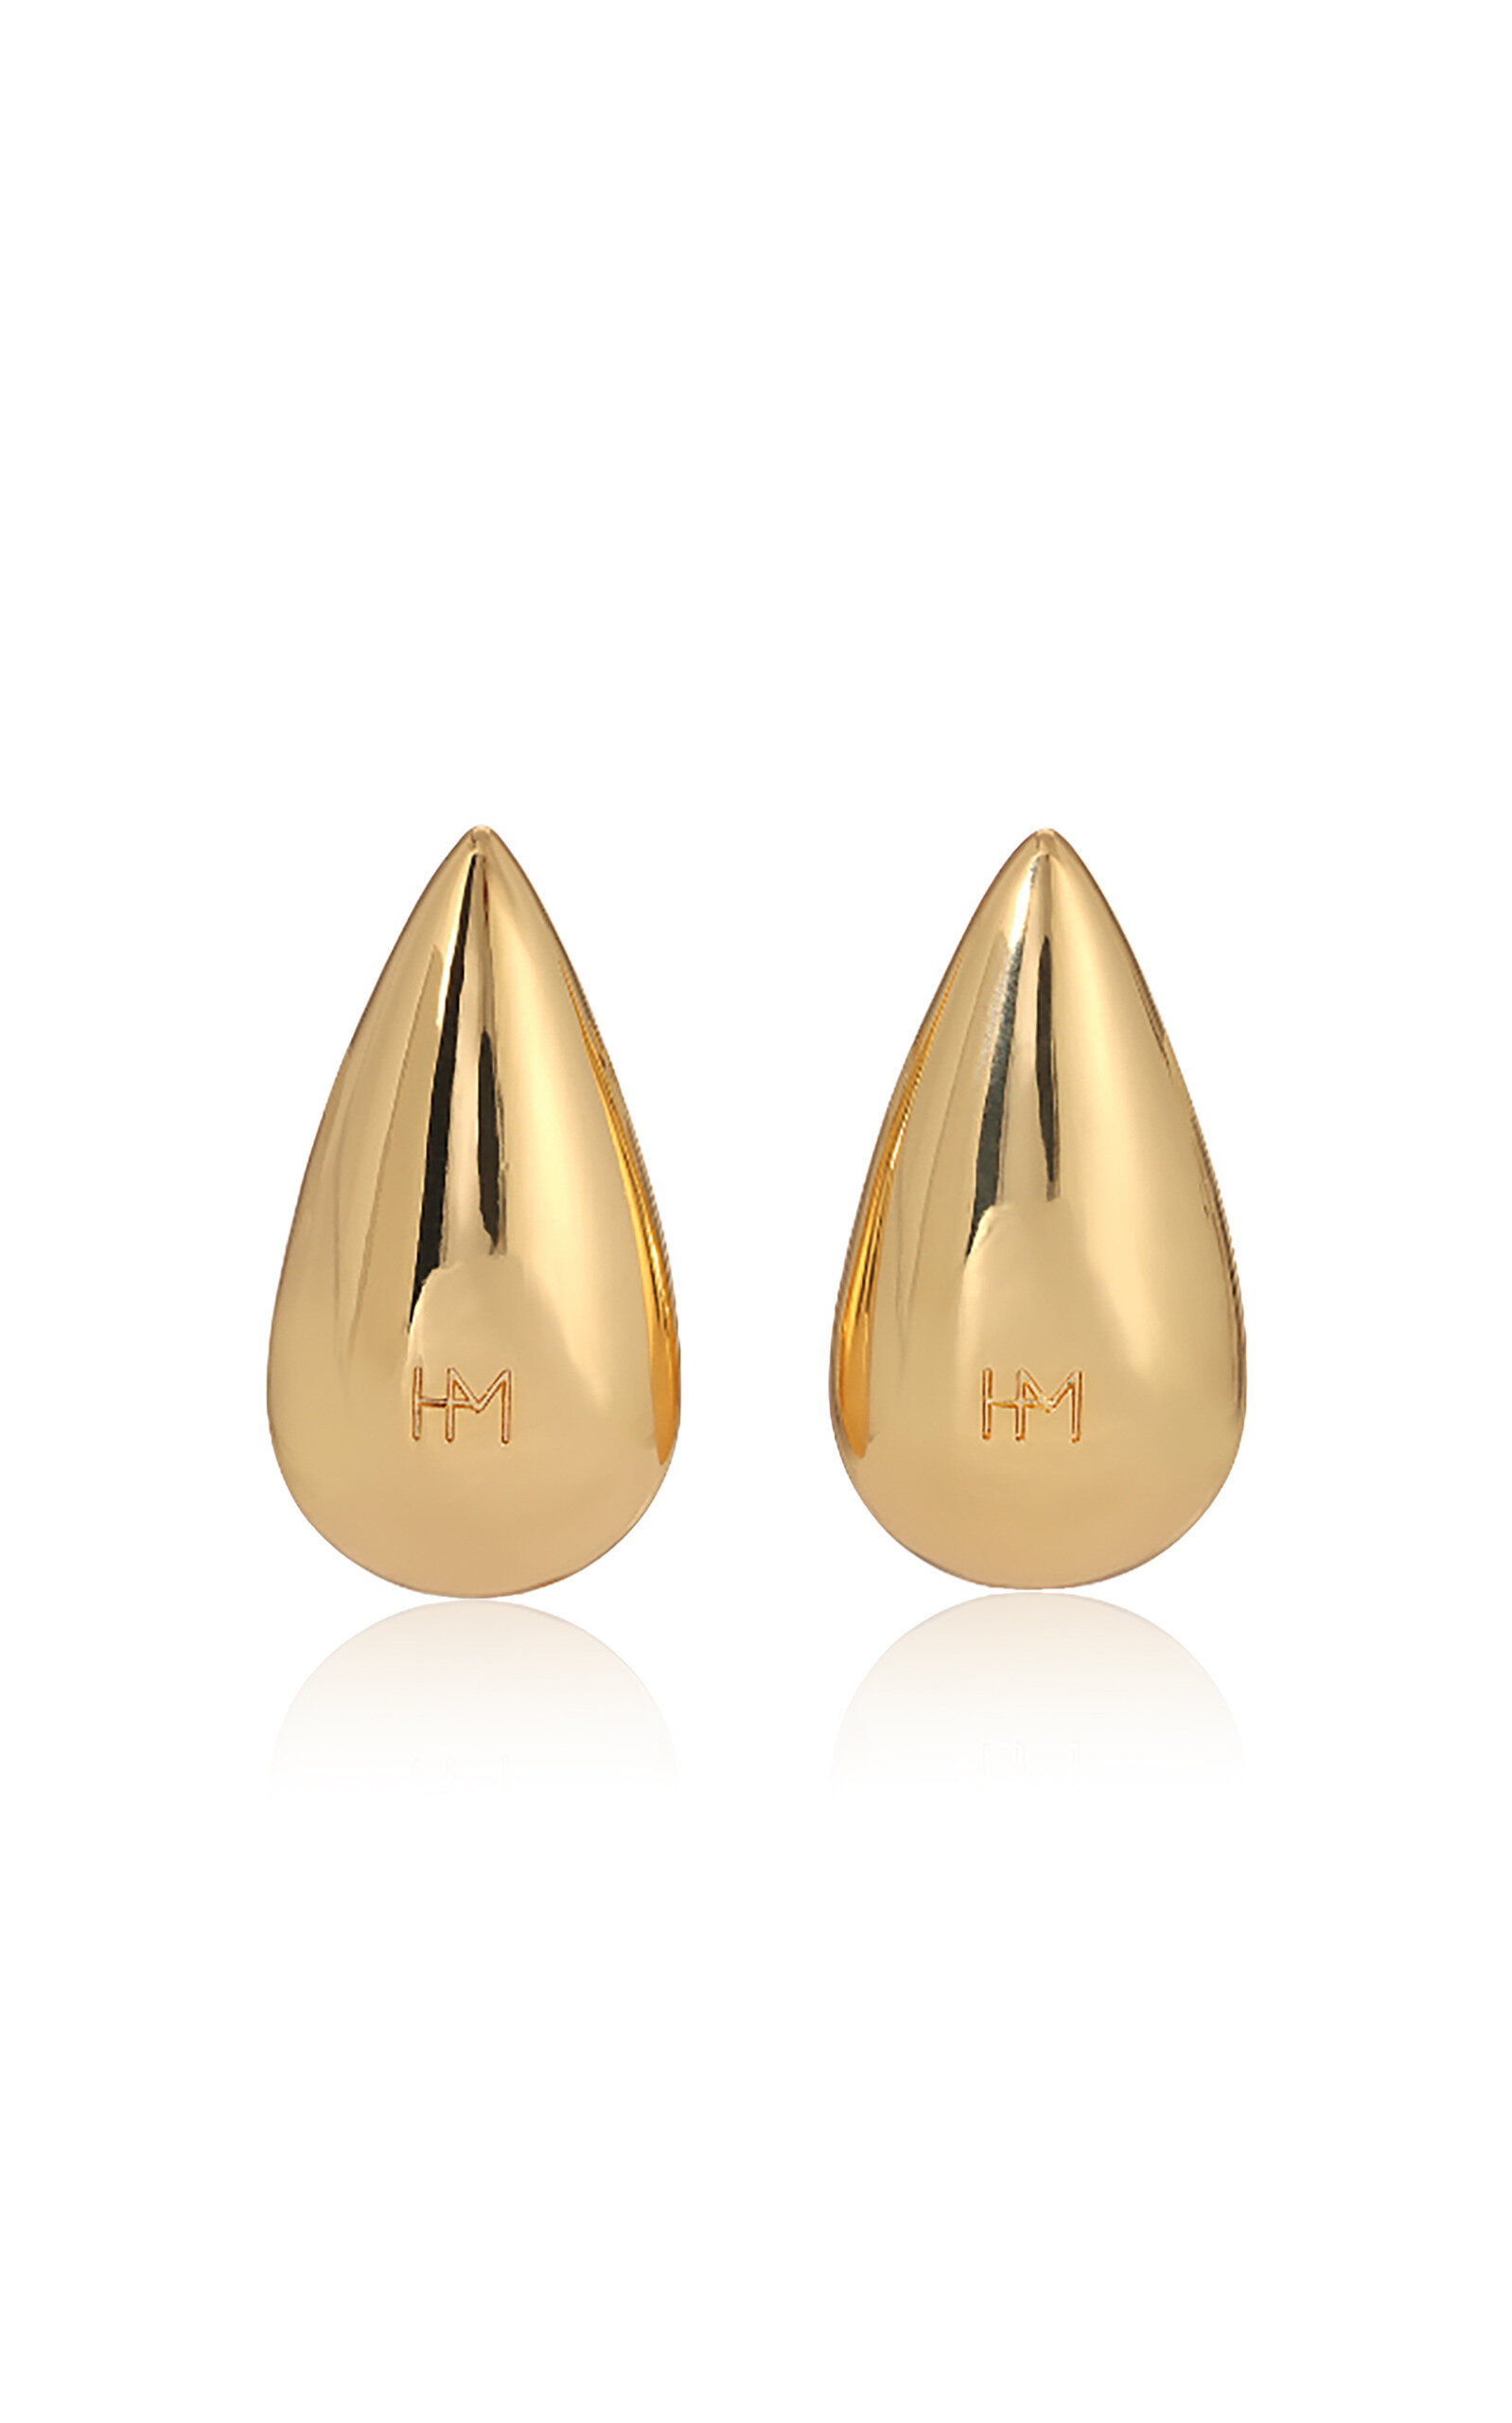 Rain Gold-Plated Earrings